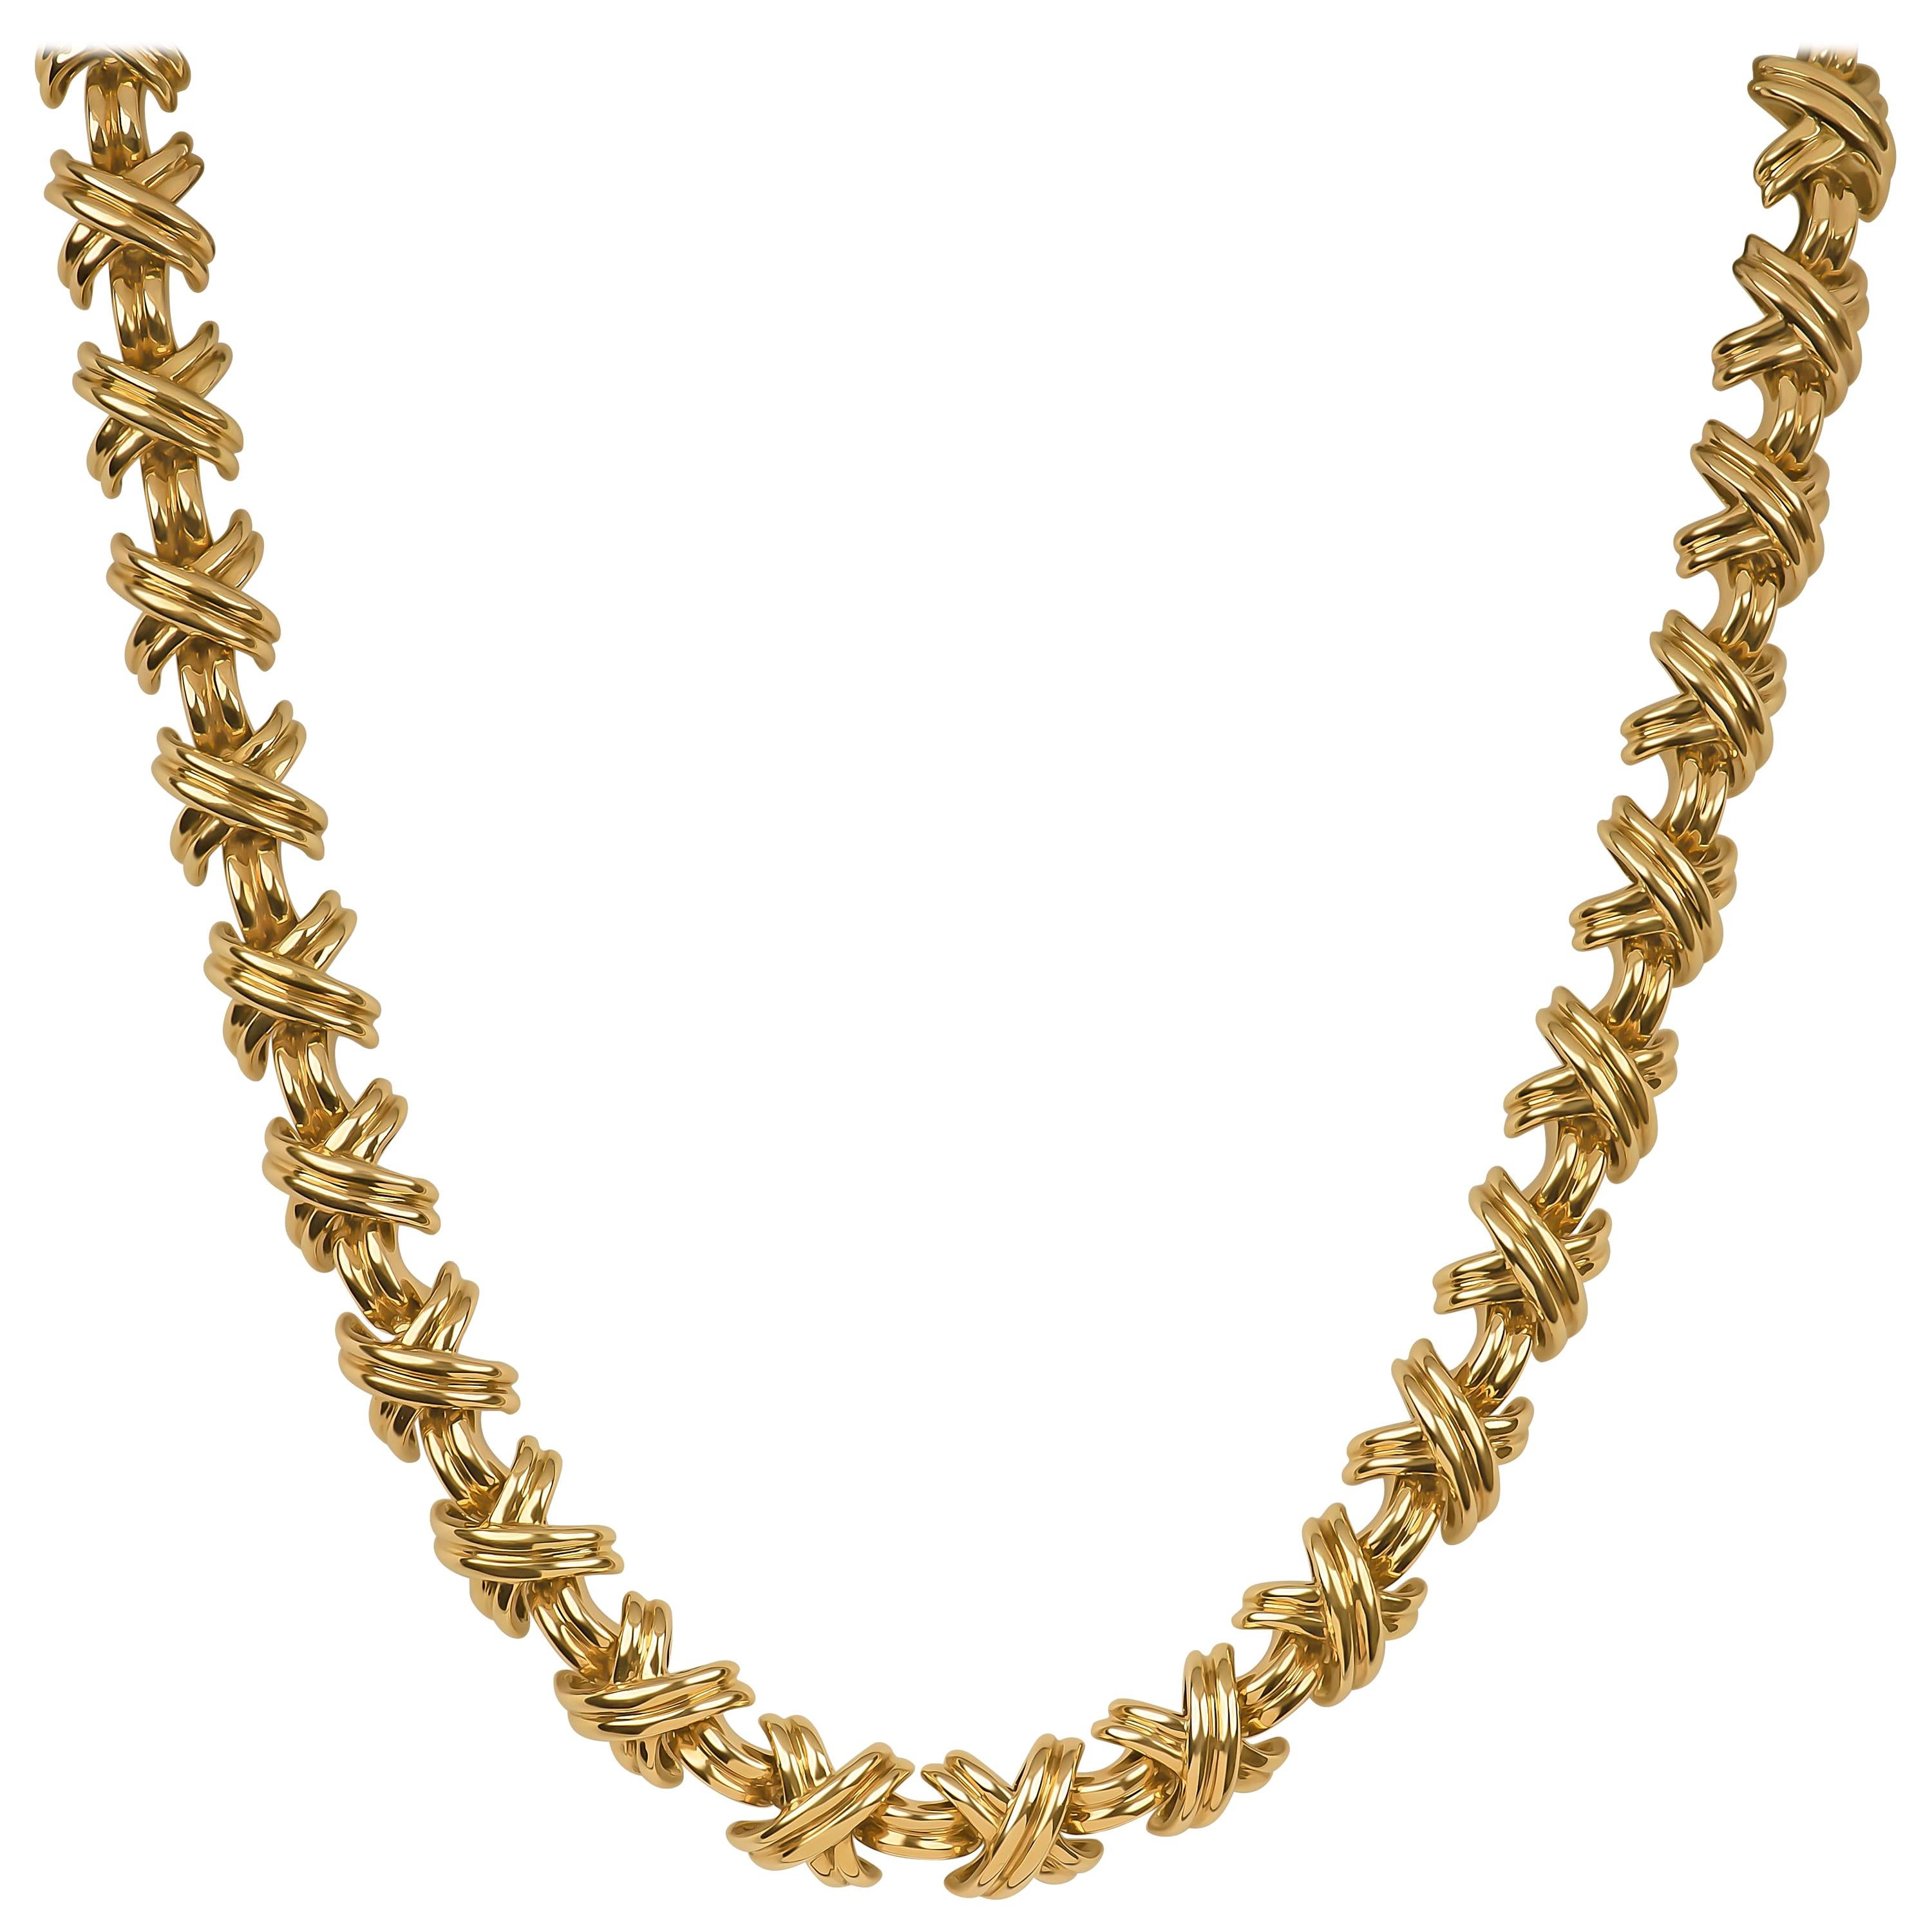 Tiffany & Co. Signature X Design Necklace, 18 Karat Yellow Gold